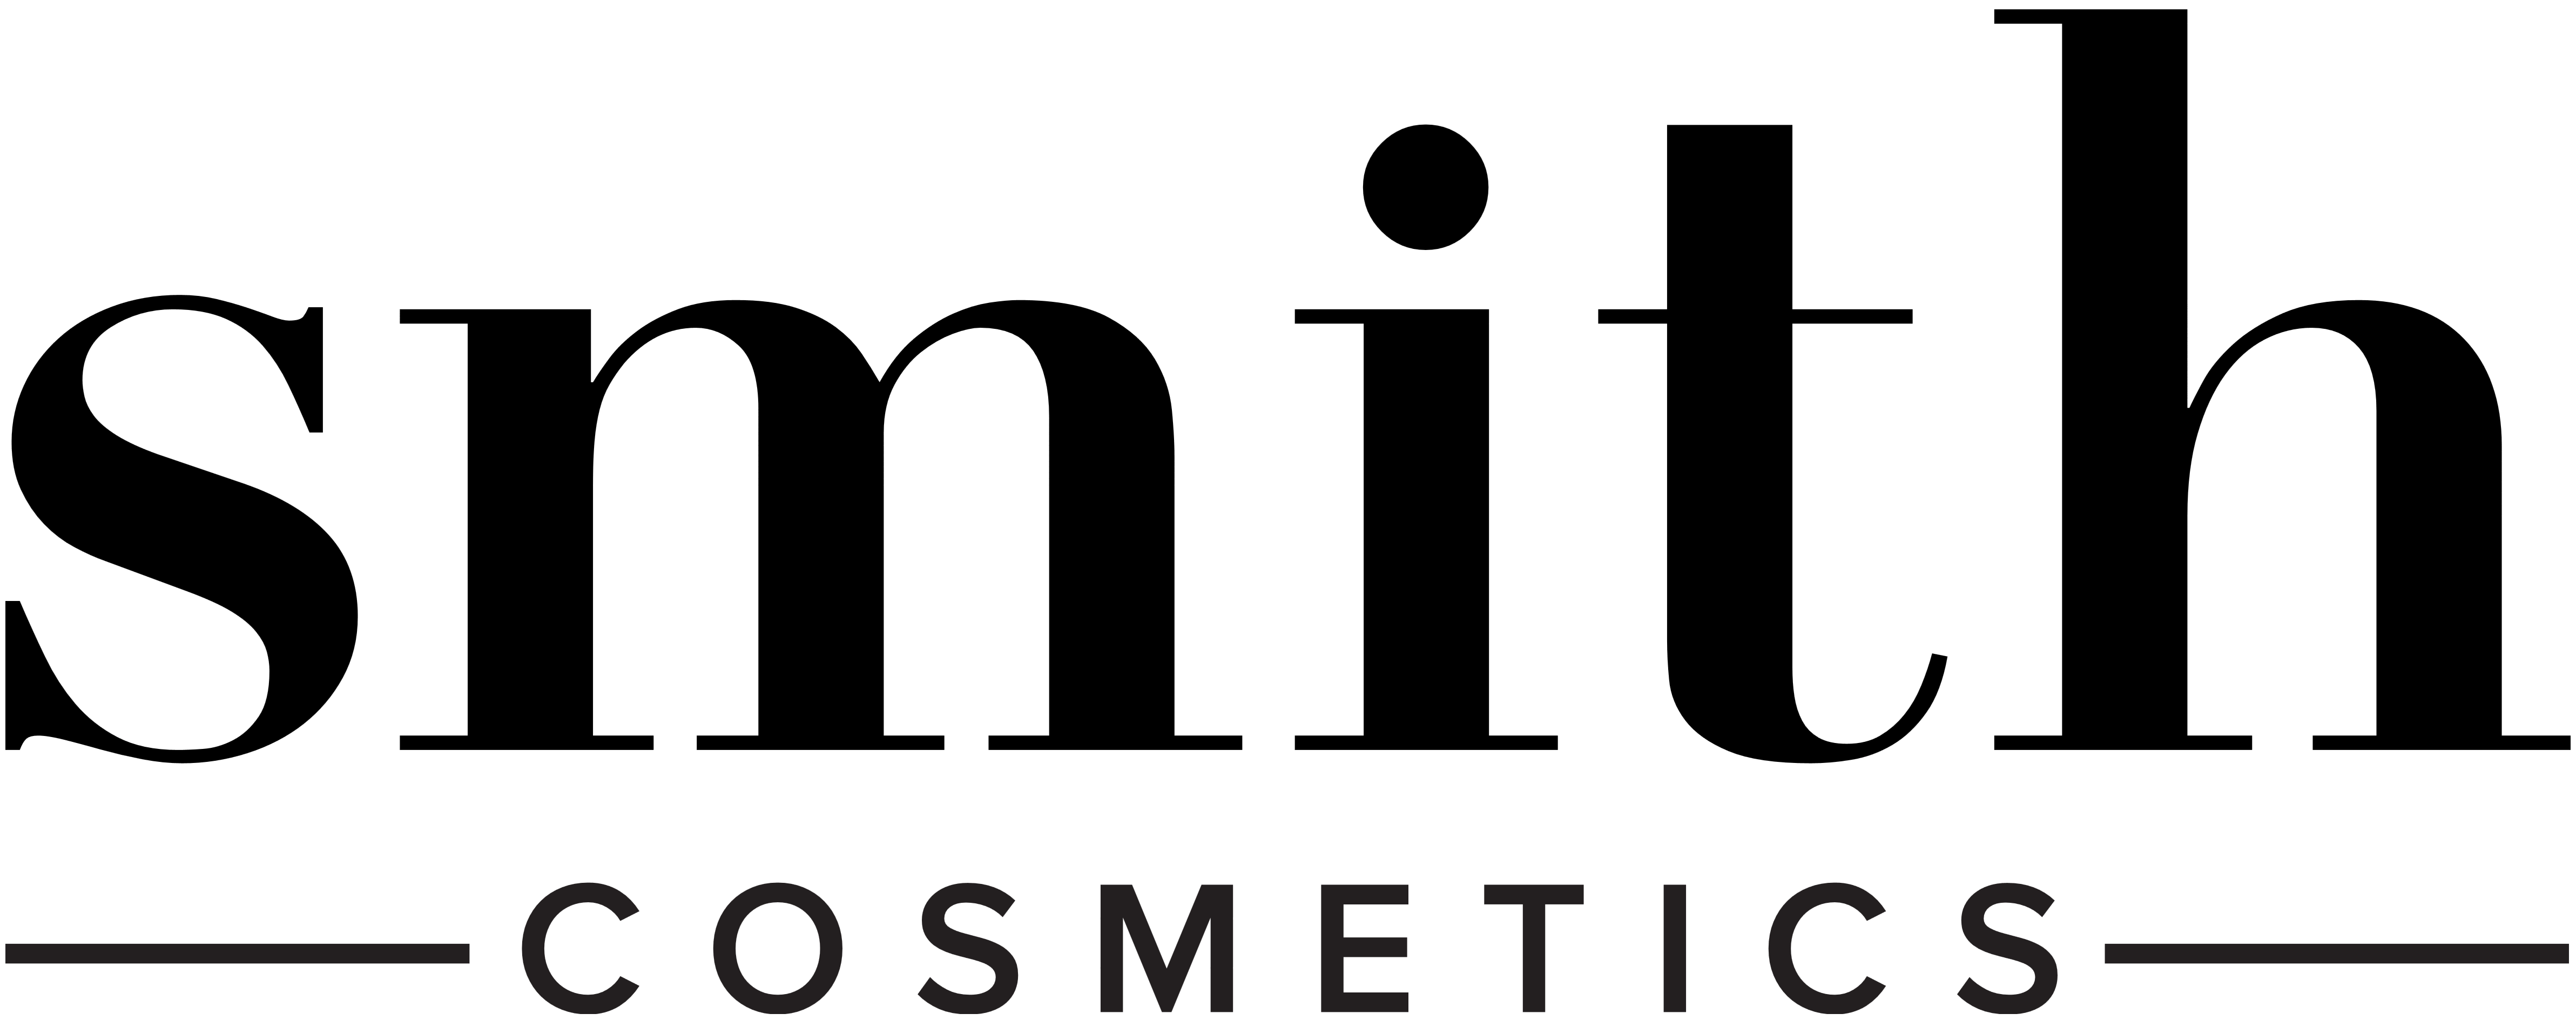 Smith Cosmetics logo, logotype